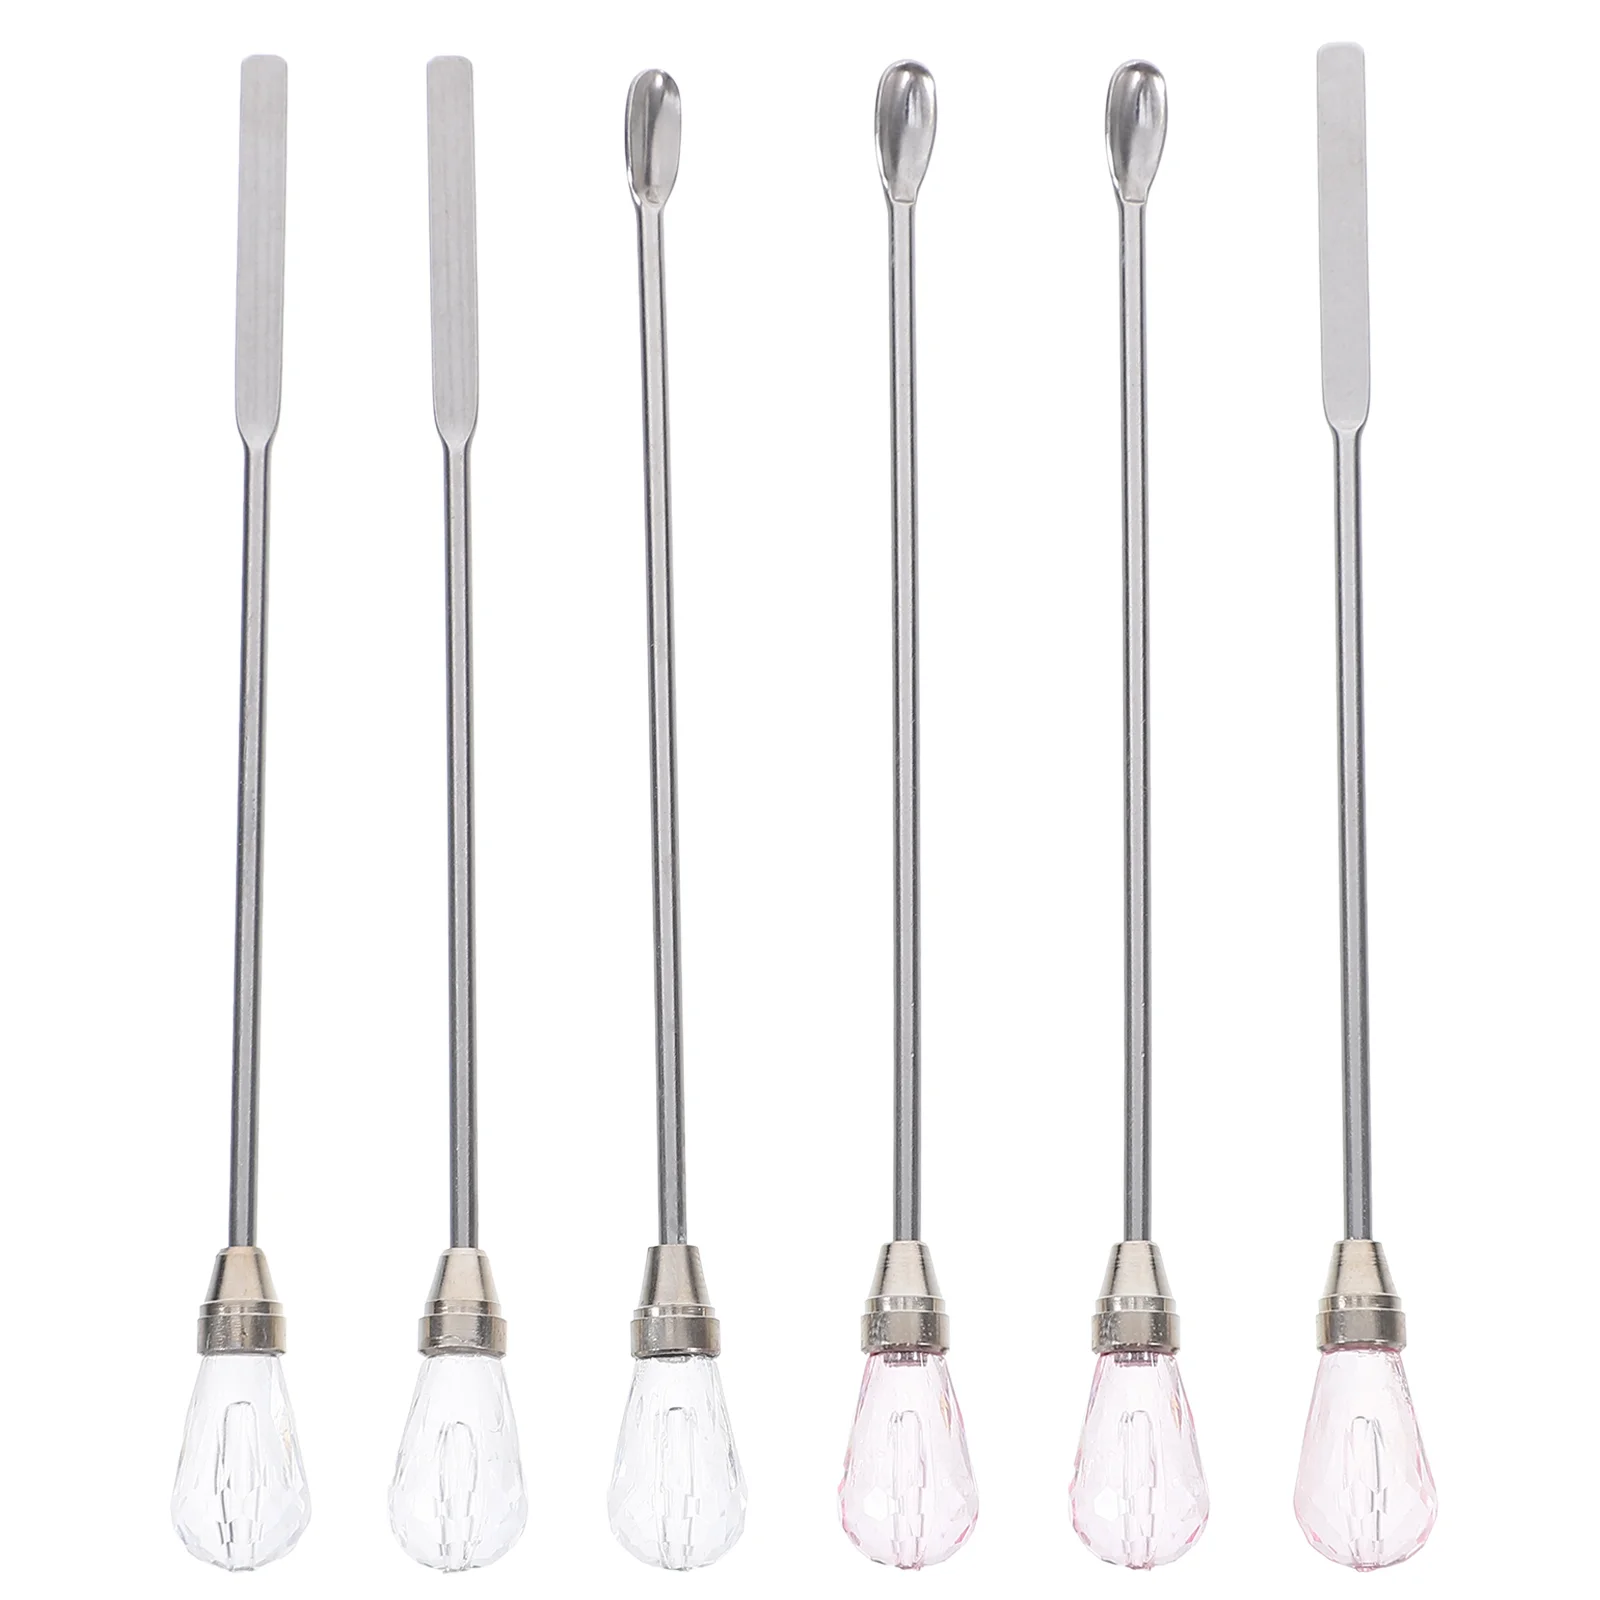 

6 Pcs Wax Stirring Stick Sticks for Waxing Metal Seal Spoon Mixing Paddles Stirrers